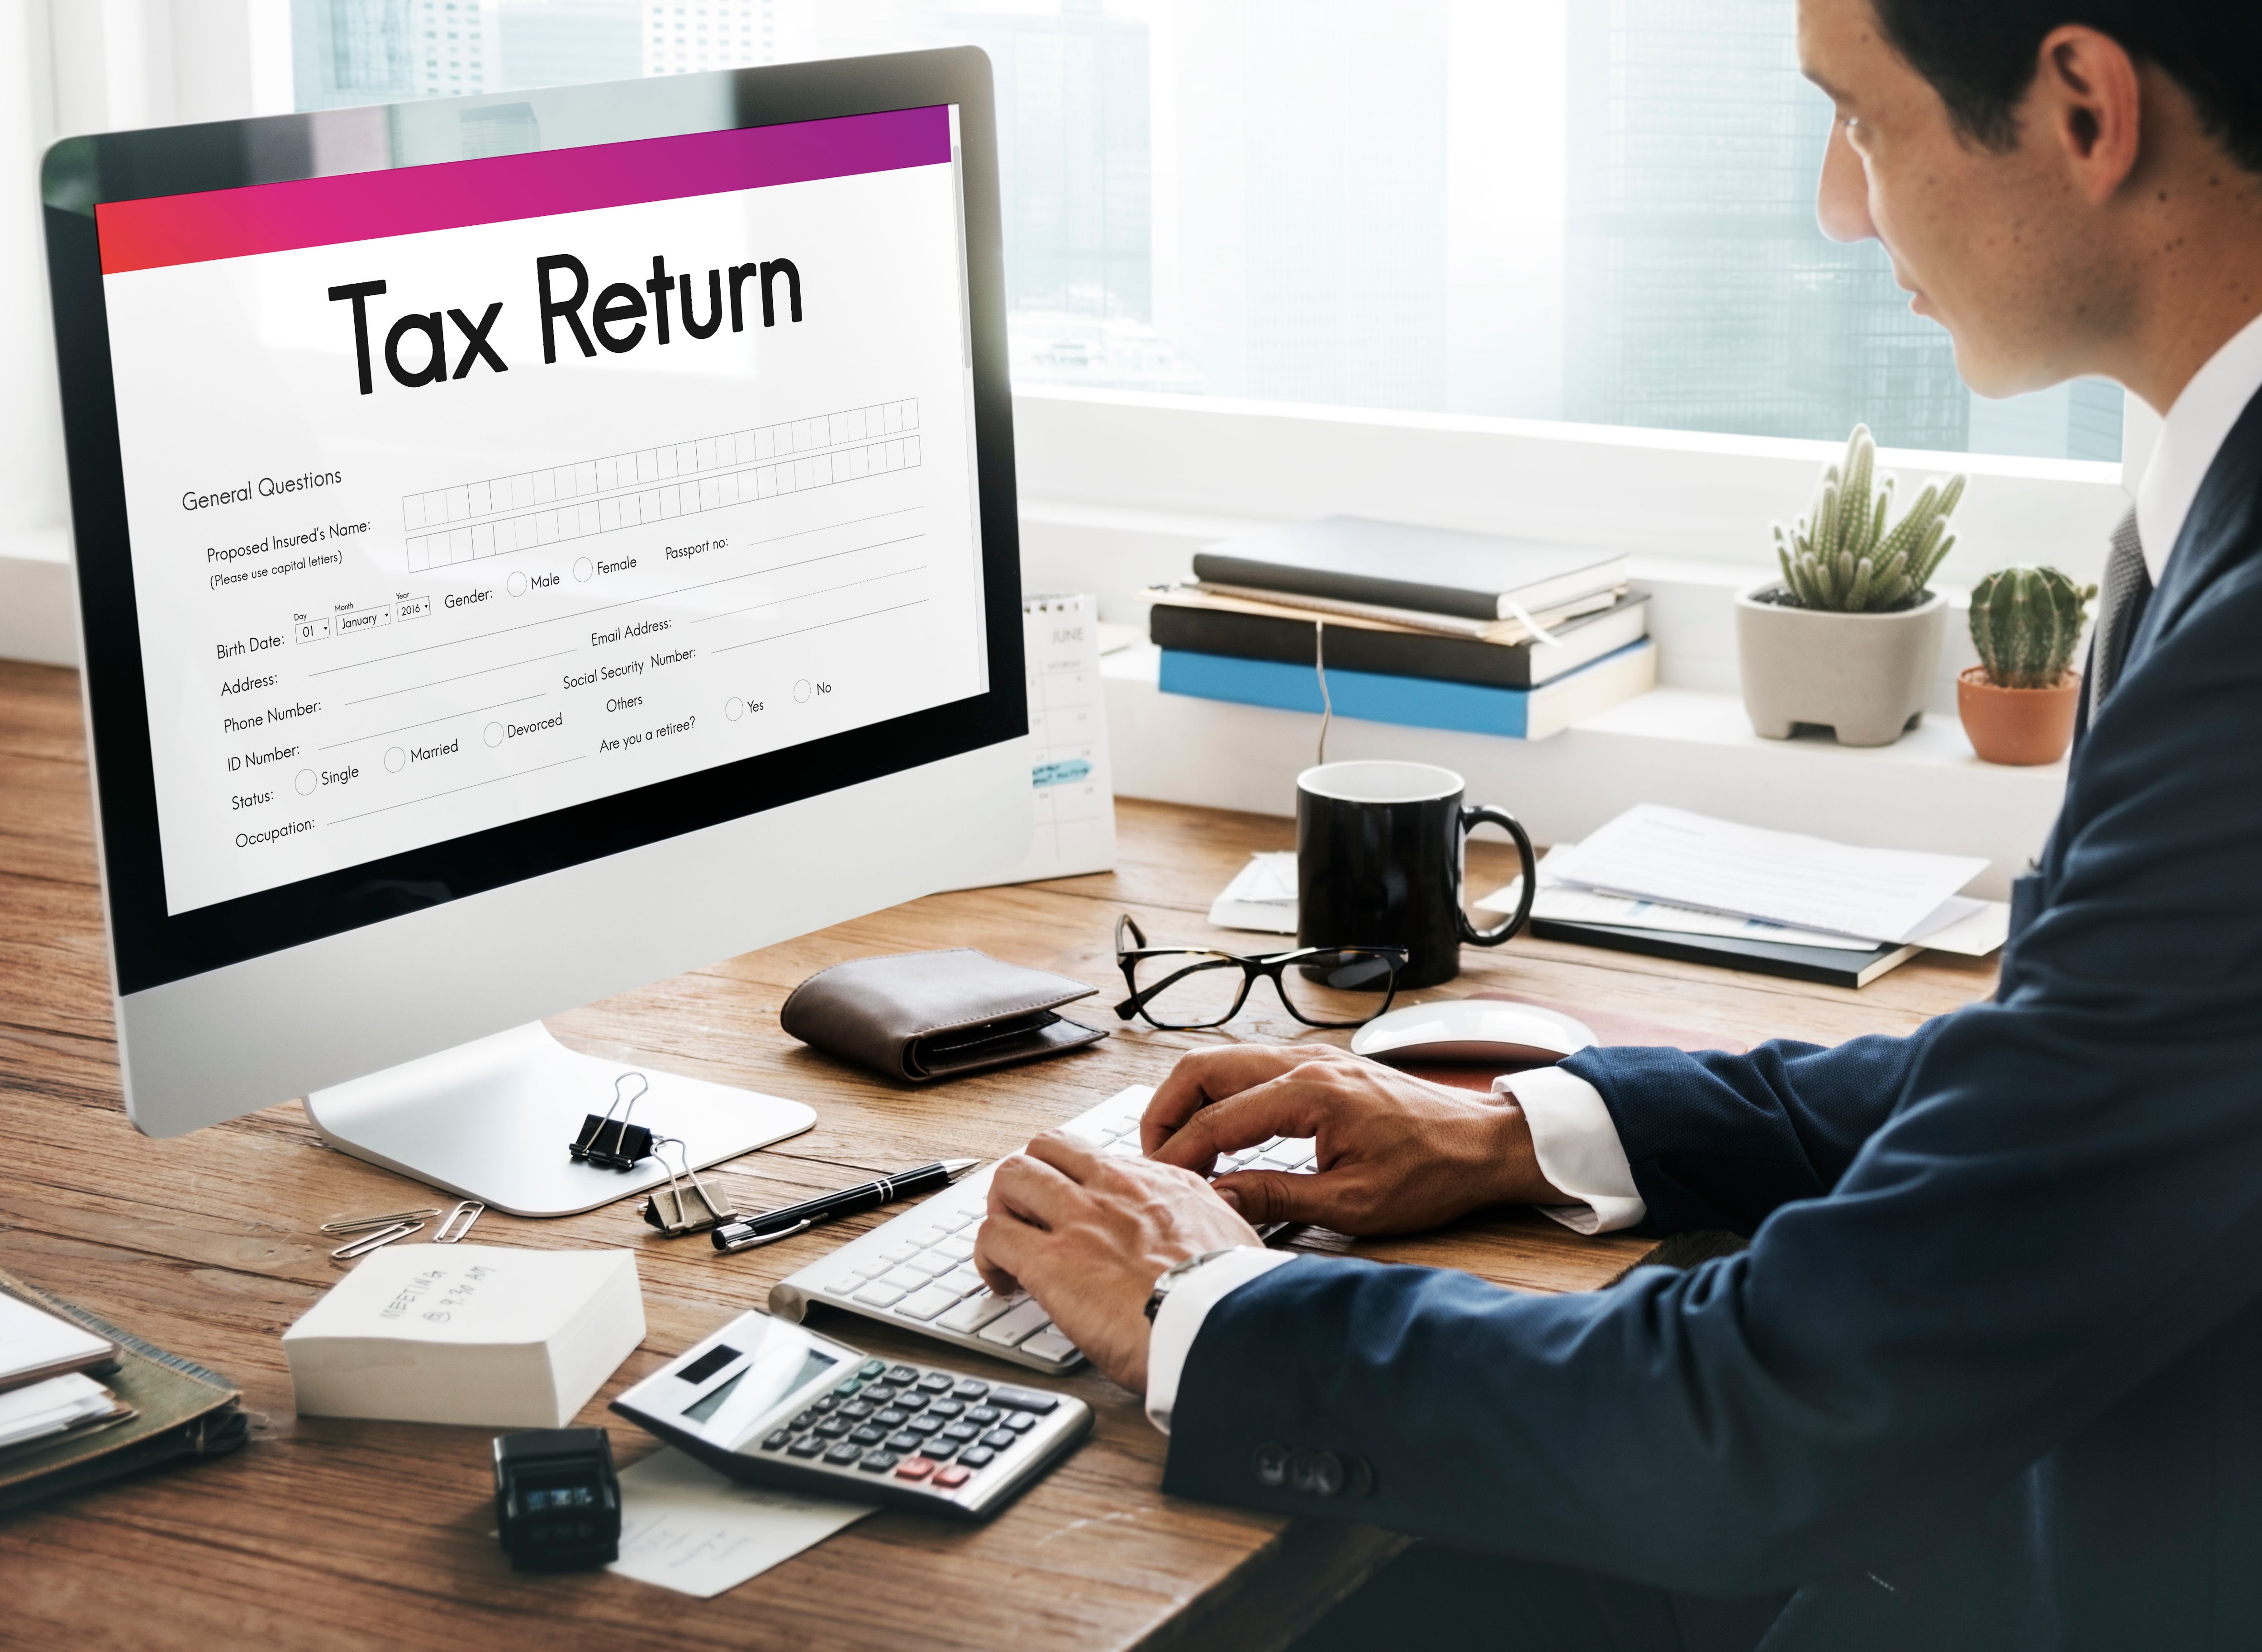 tax-return-financial-form-concept.jpg